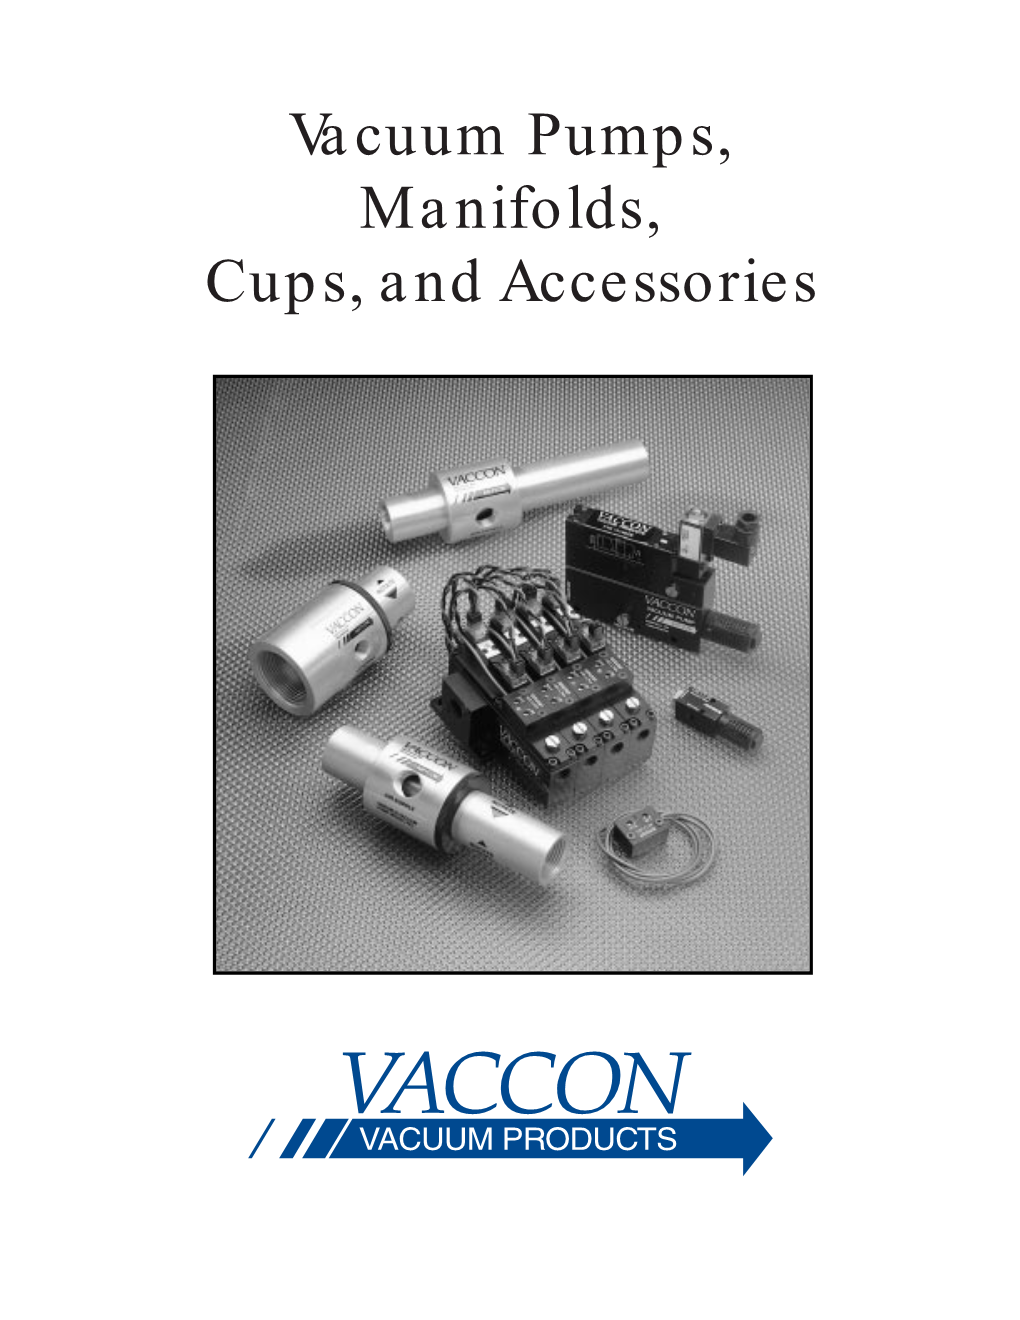 Vaccon Vacuum Products Catalog